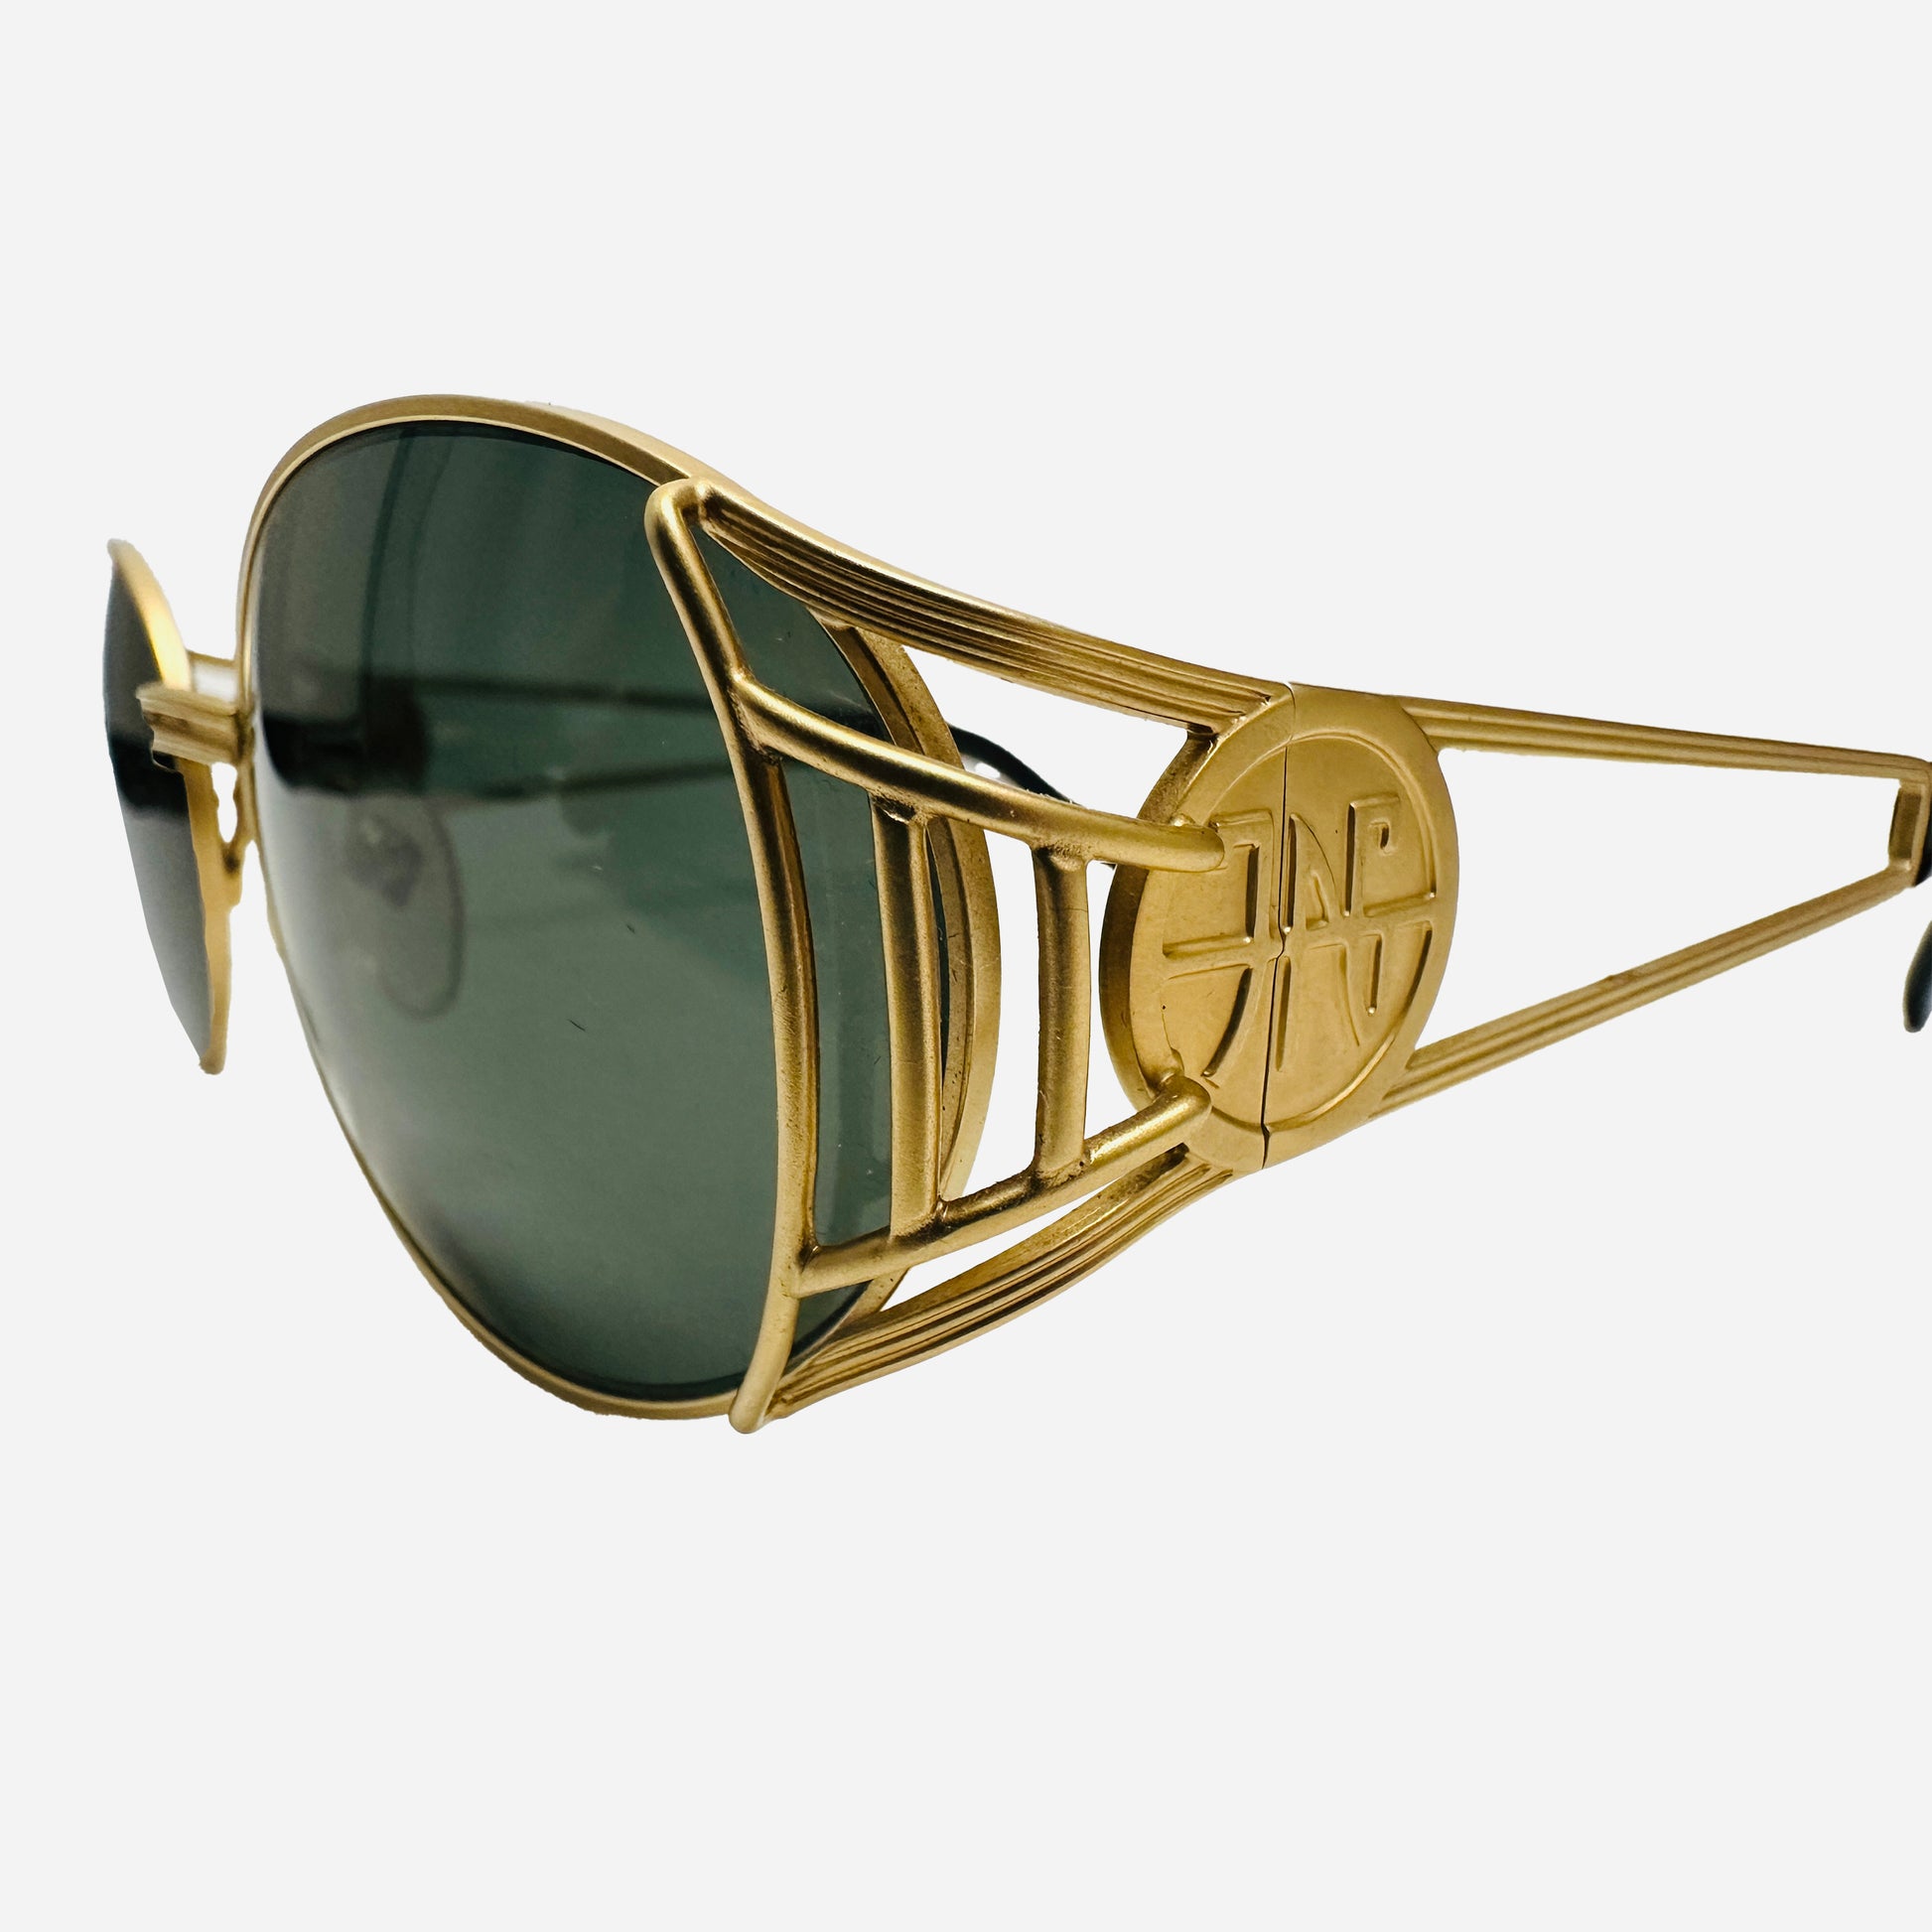 Vintage-Jean-Paul-Gaultier-Sonnenbrille-Sunglasses-Model58-6102-made-in-japan-the-seekers-sunglasses-detail